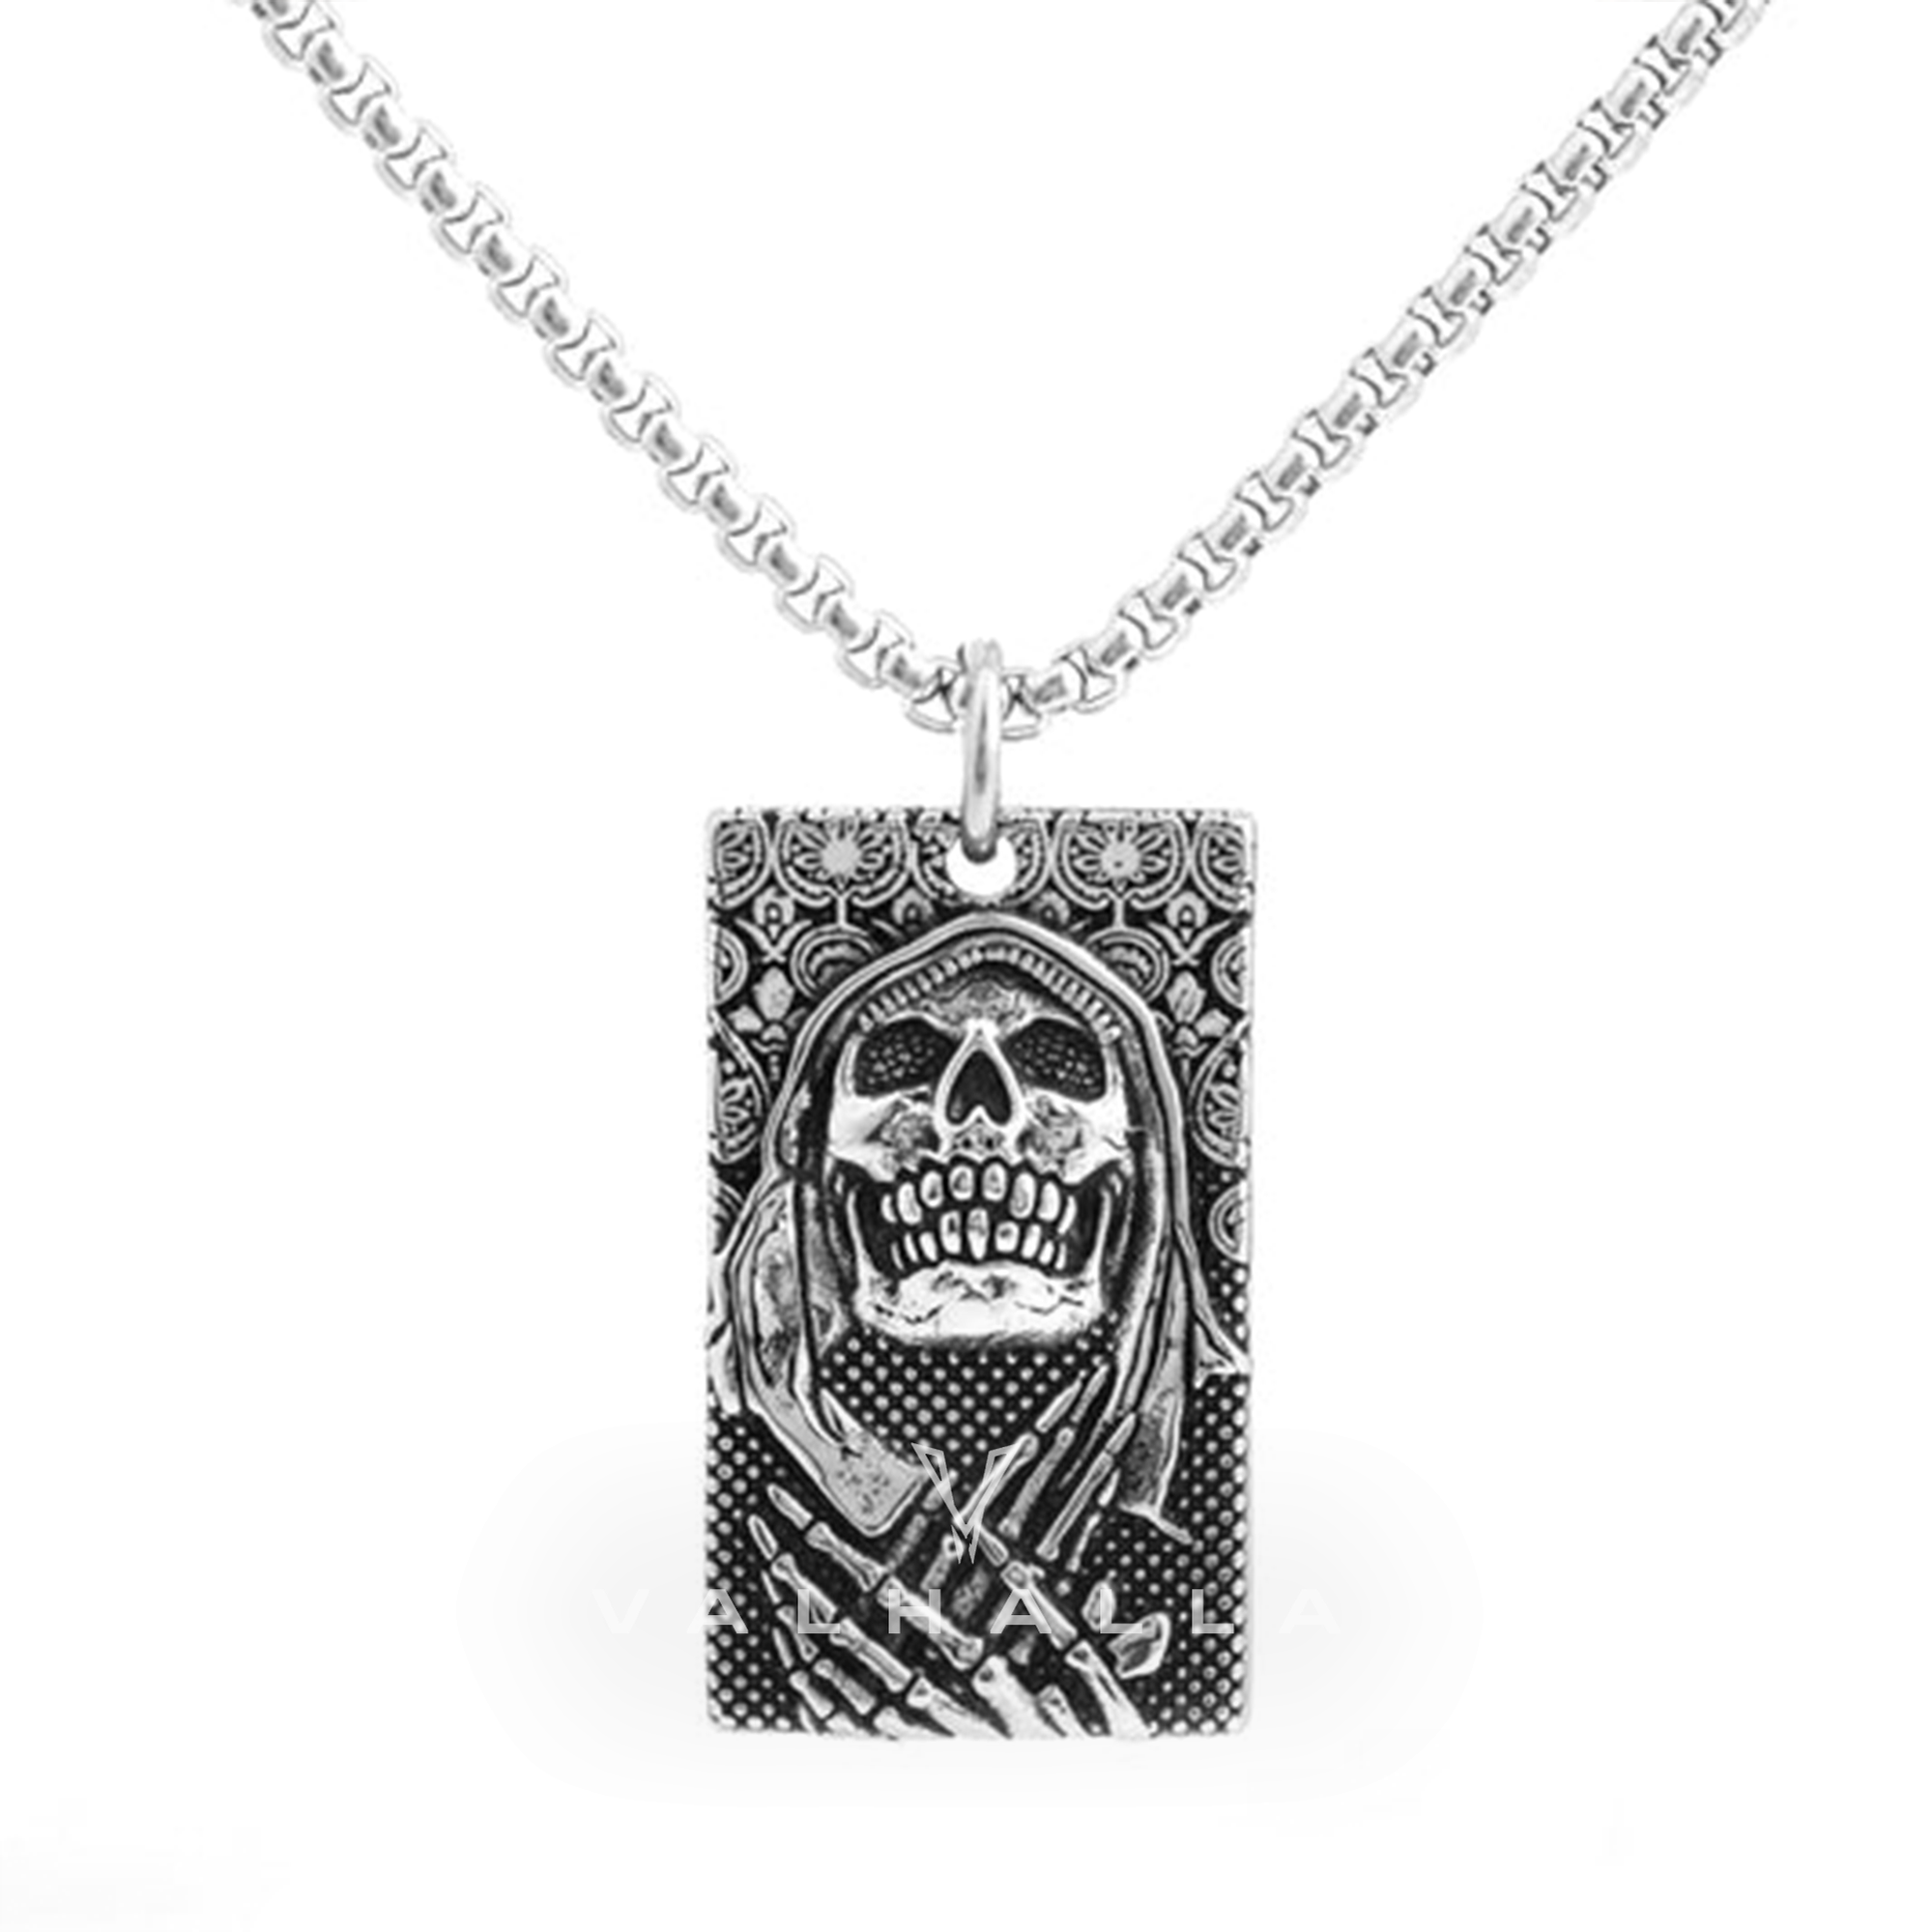 Death Skull Stainless Steel Pendant & Chain